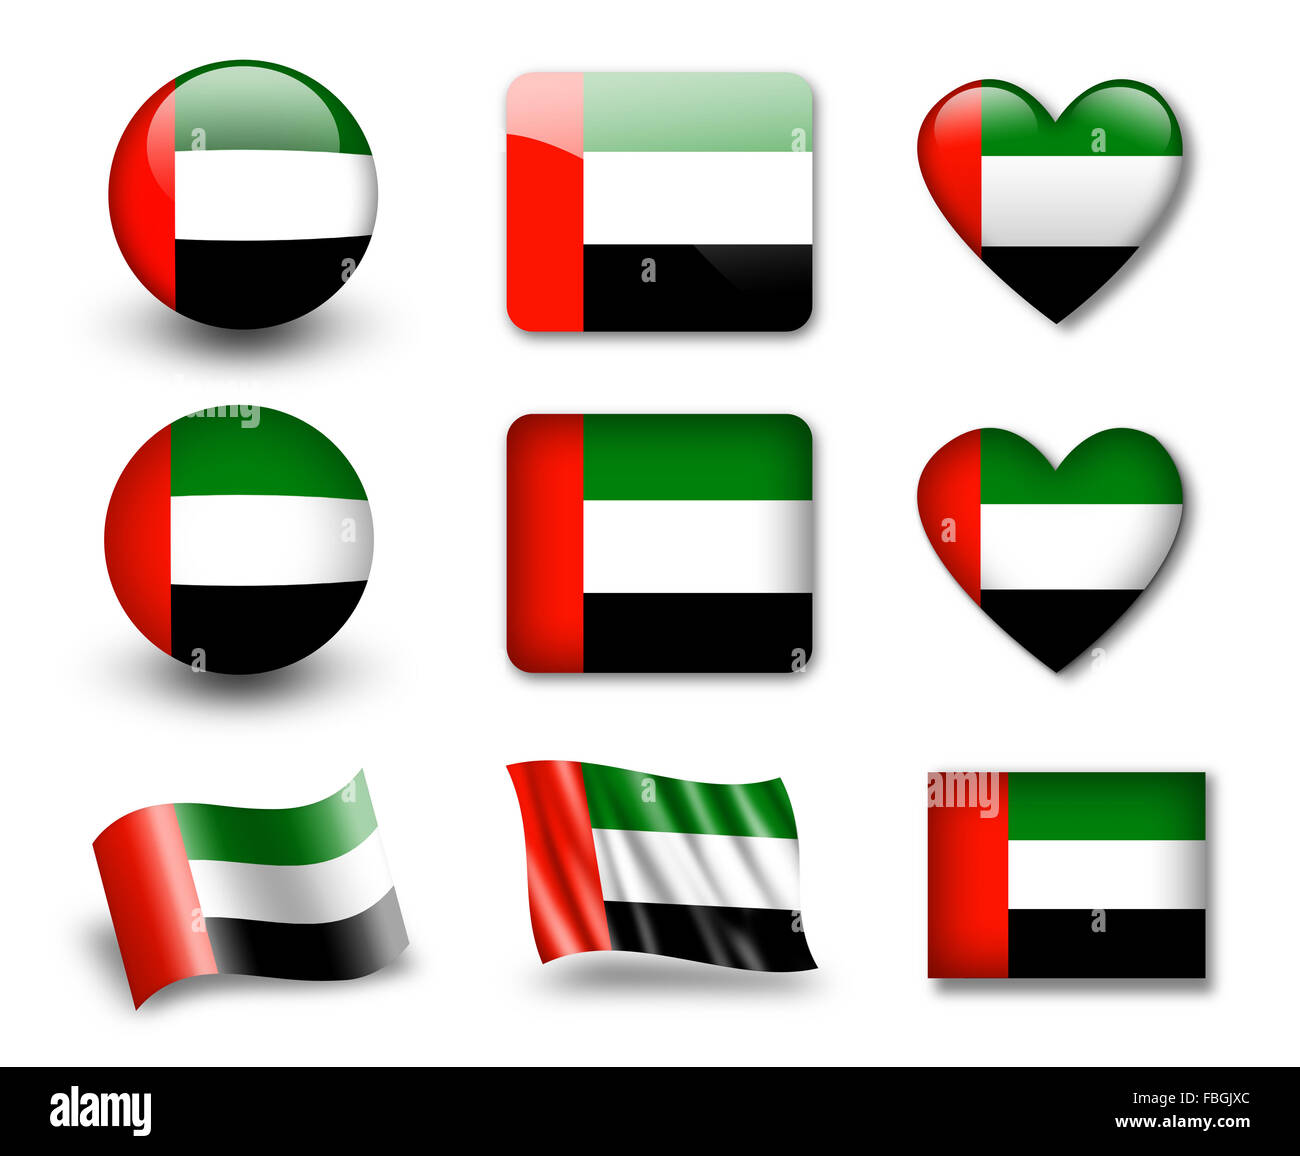 The UAE flag Stock Photo